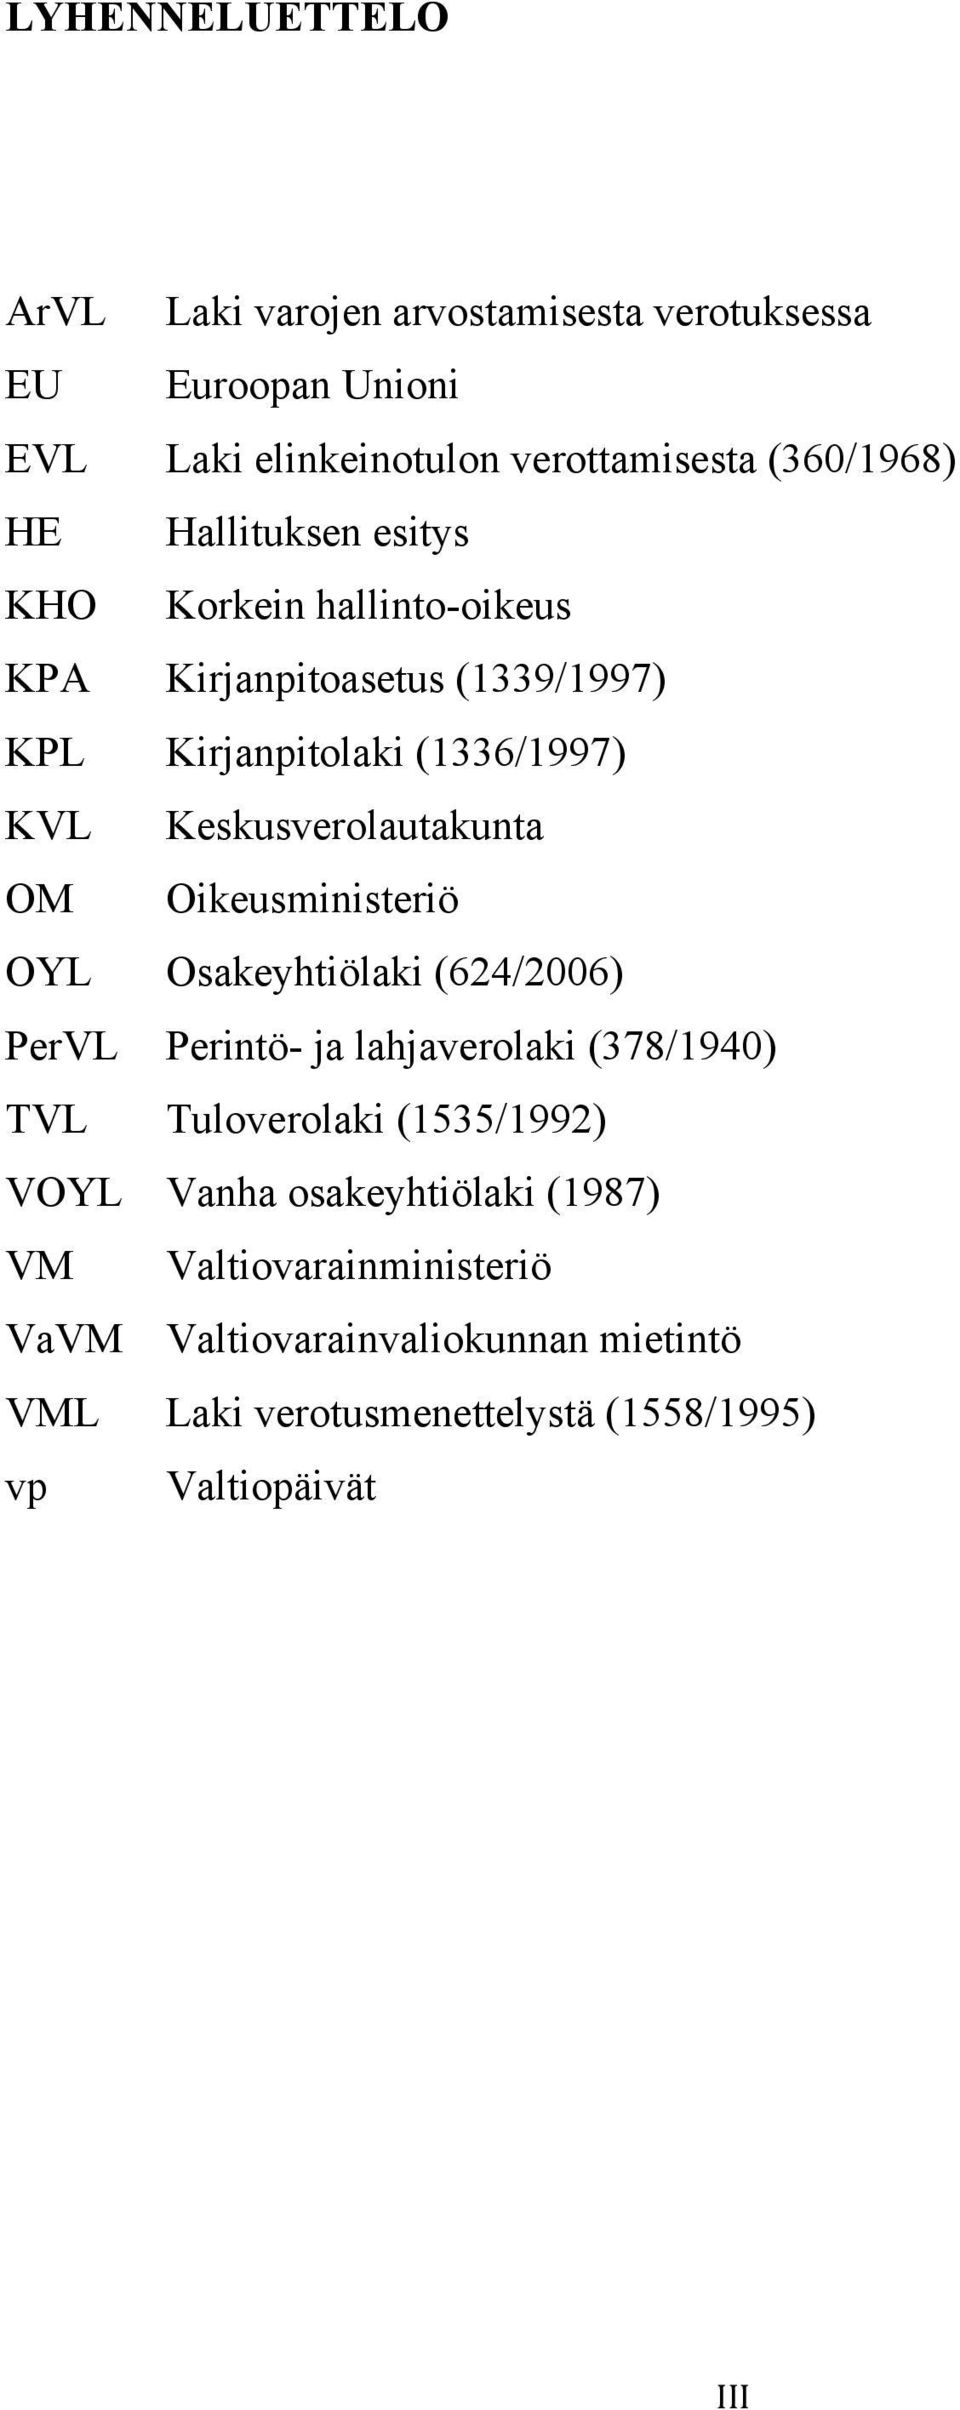 OM Oikeusministeriö OYL Osakeyhtiölaki (624/2006) PerVL Perintö- ja lahjaverolaki (378/1940) TVL Tuloverolaki (1535/1992) VOYL Vanha